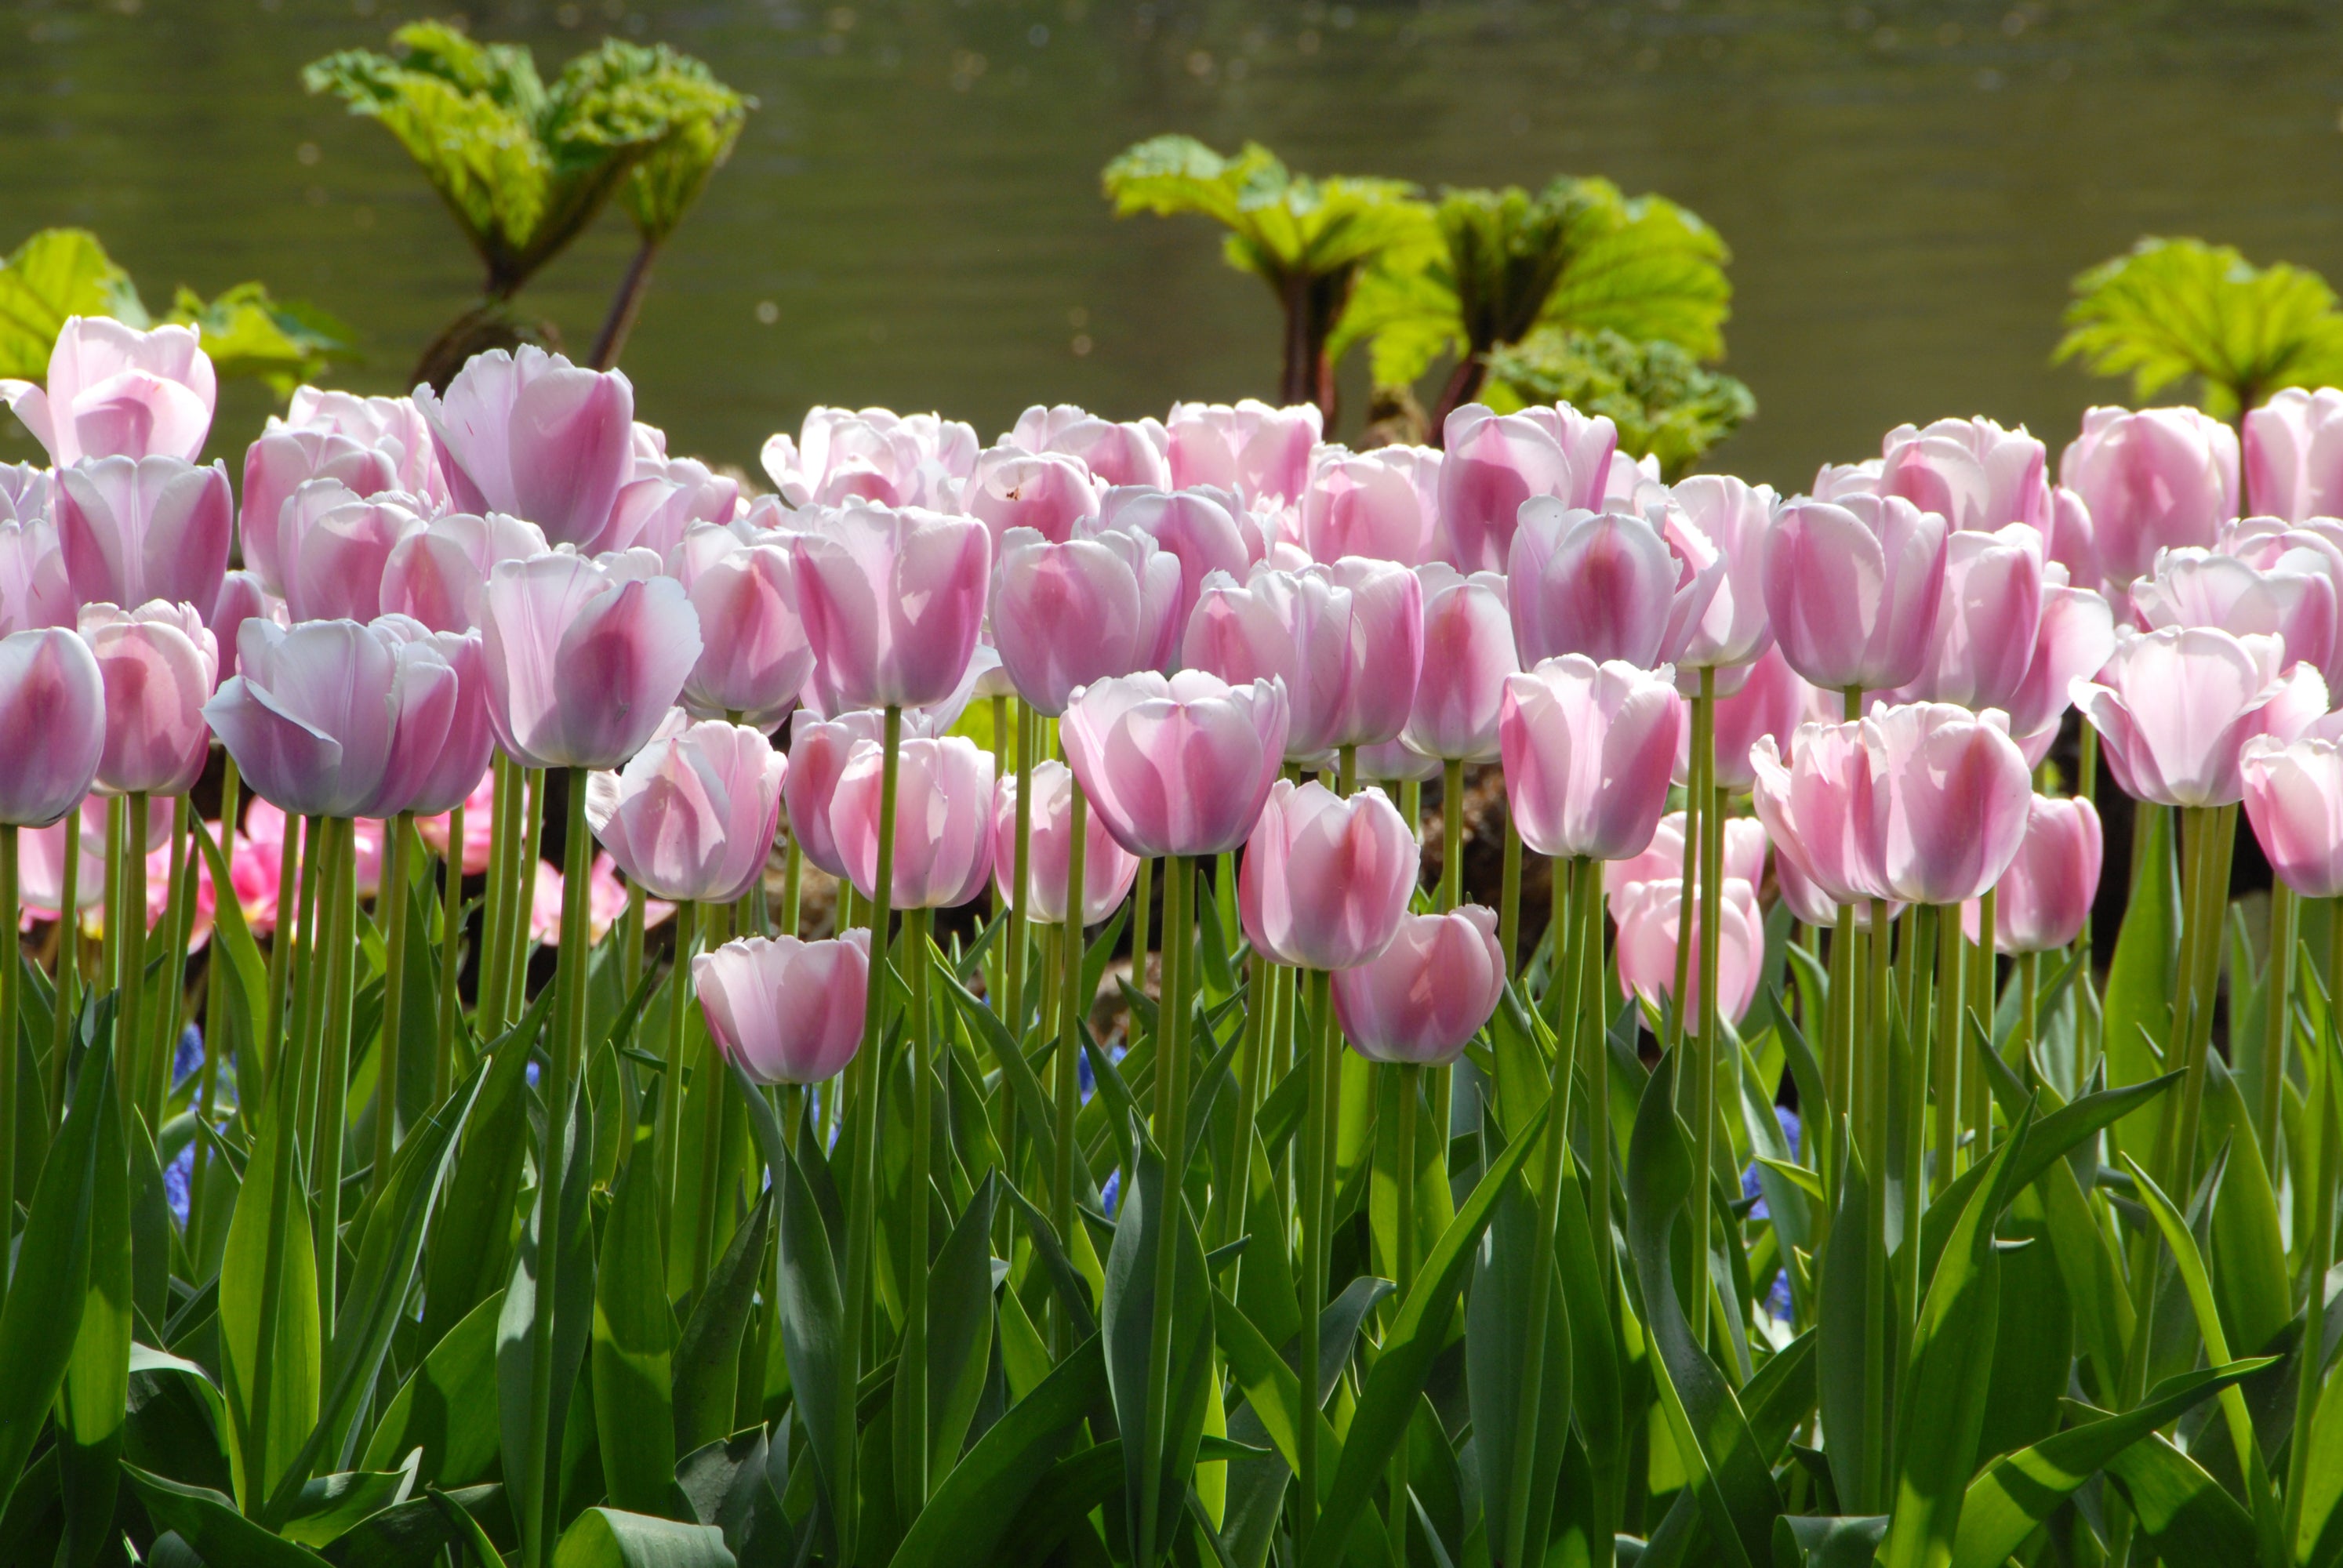 Dutch Darlings Tulip Mixture, Best Deal on Tulips